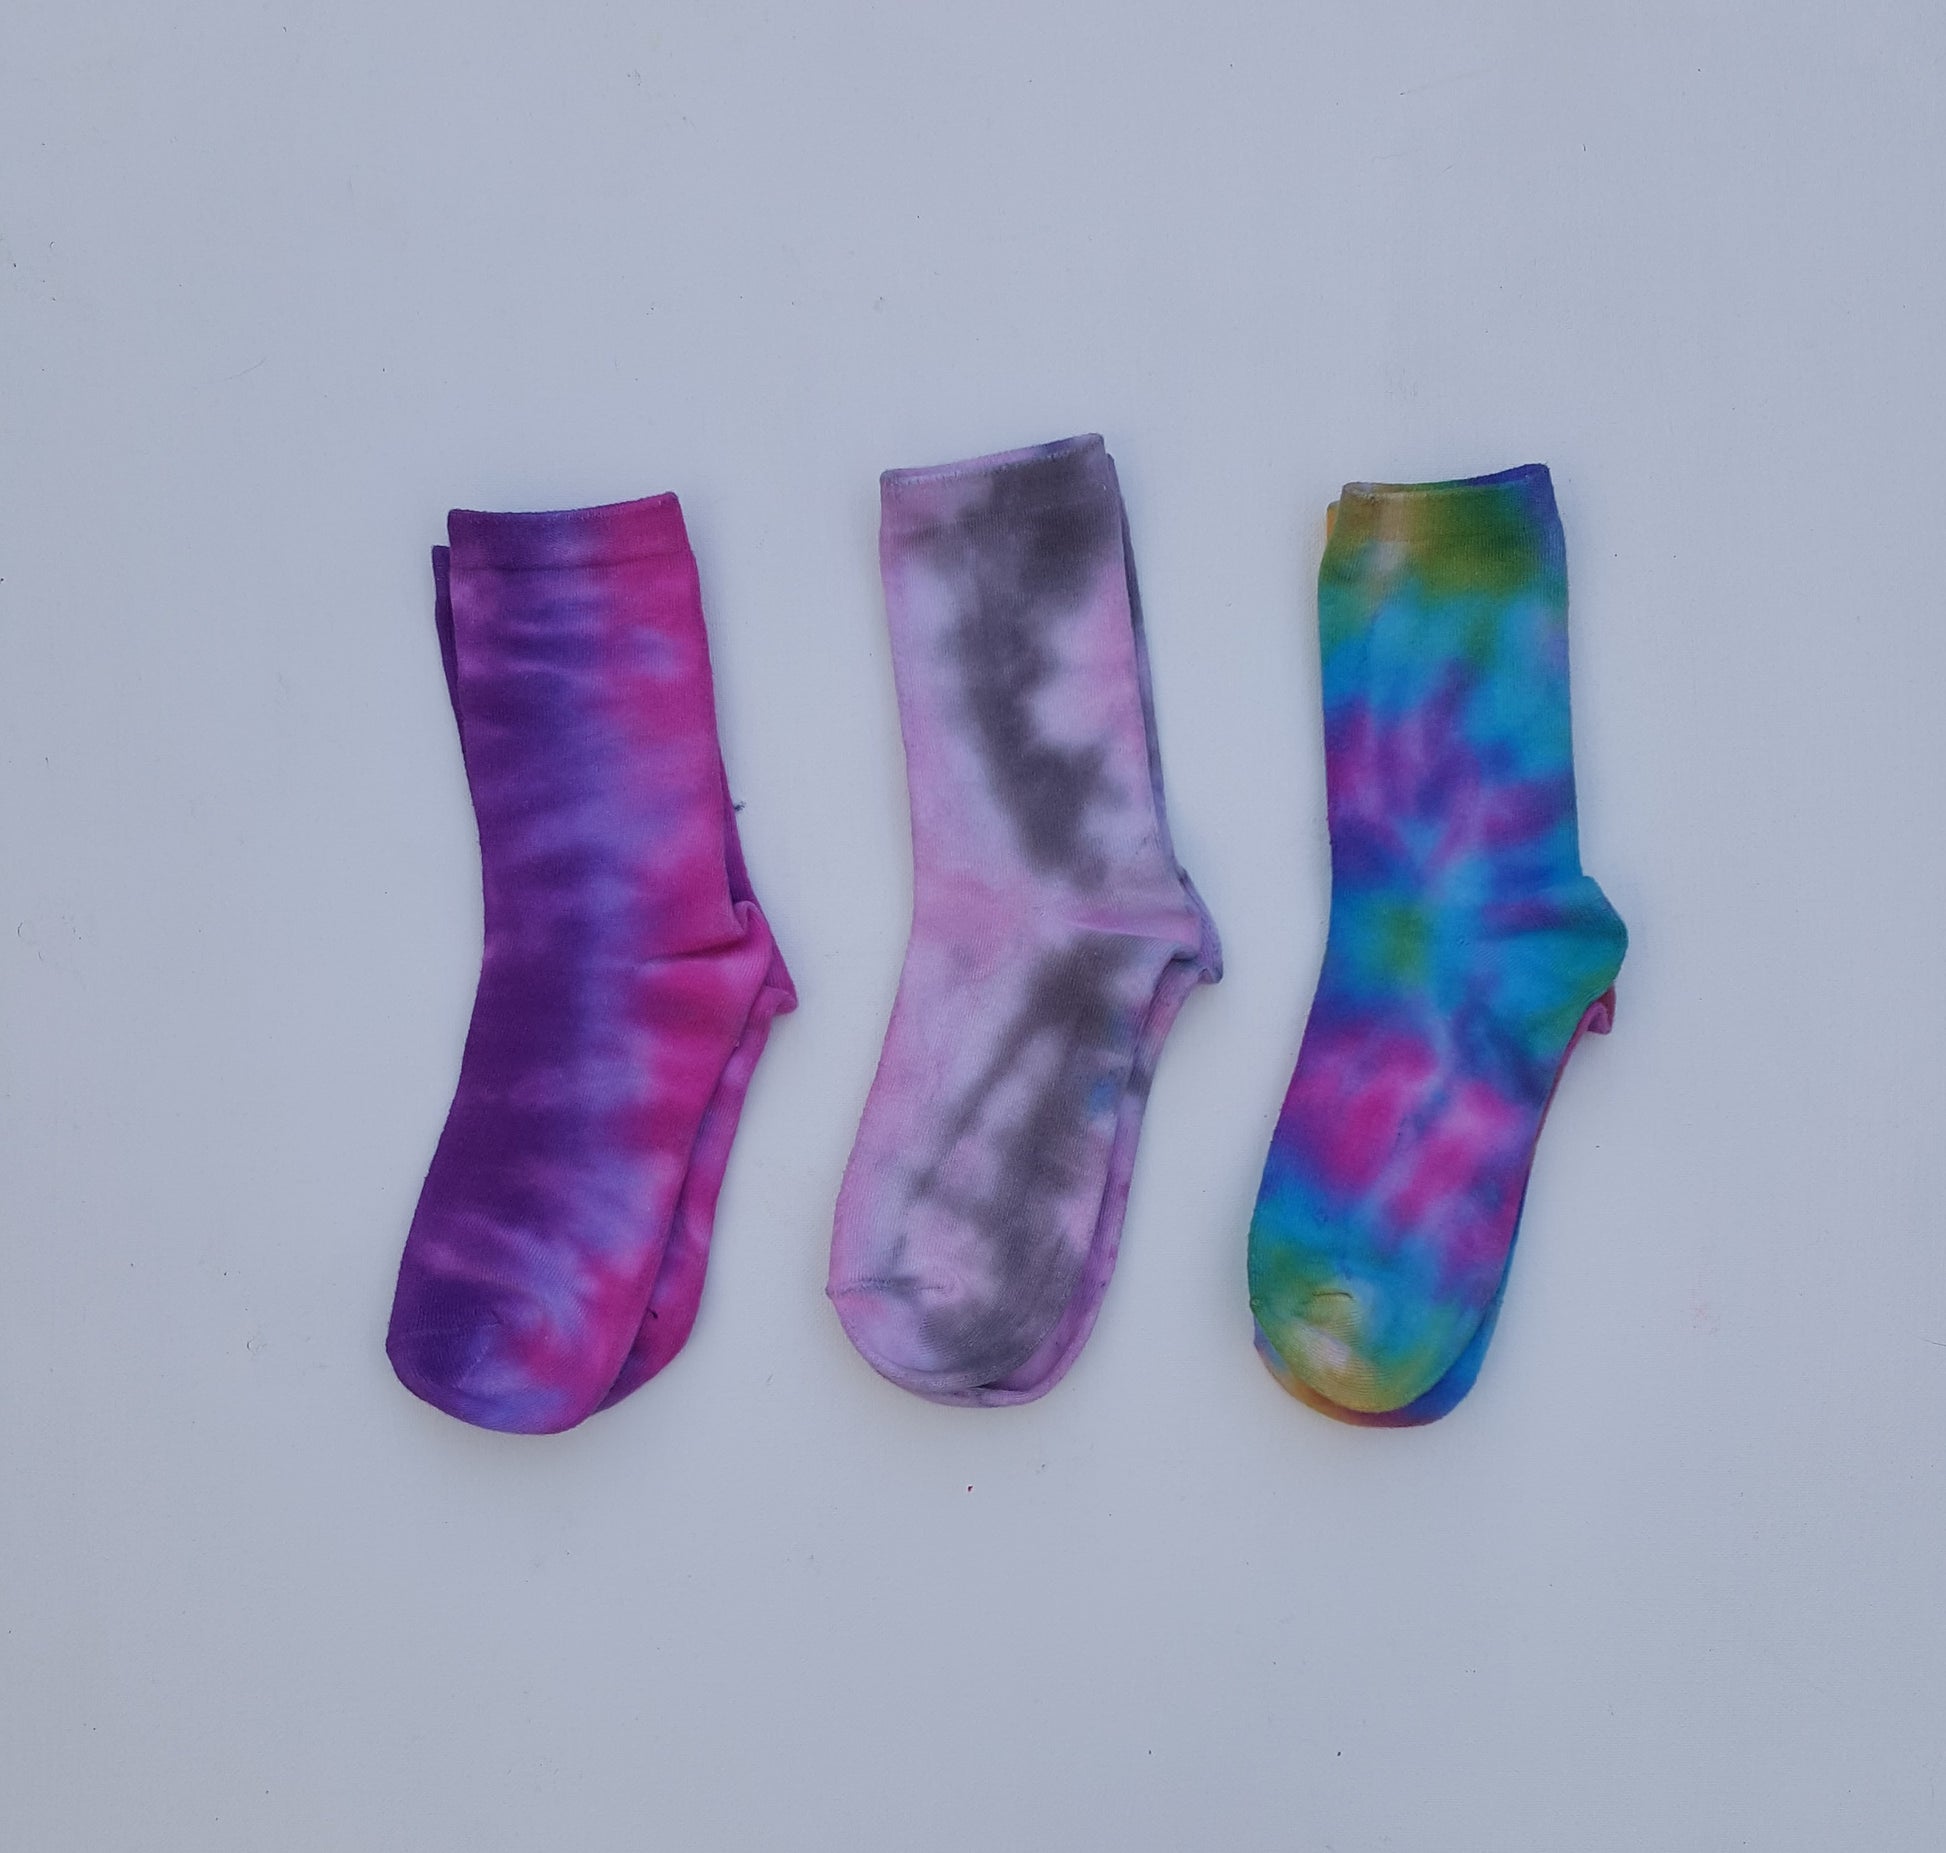 Bamboo Hippie Tie Dye Socks Womens Gift Set (3 pairs) – AbiDashery Tie Dye